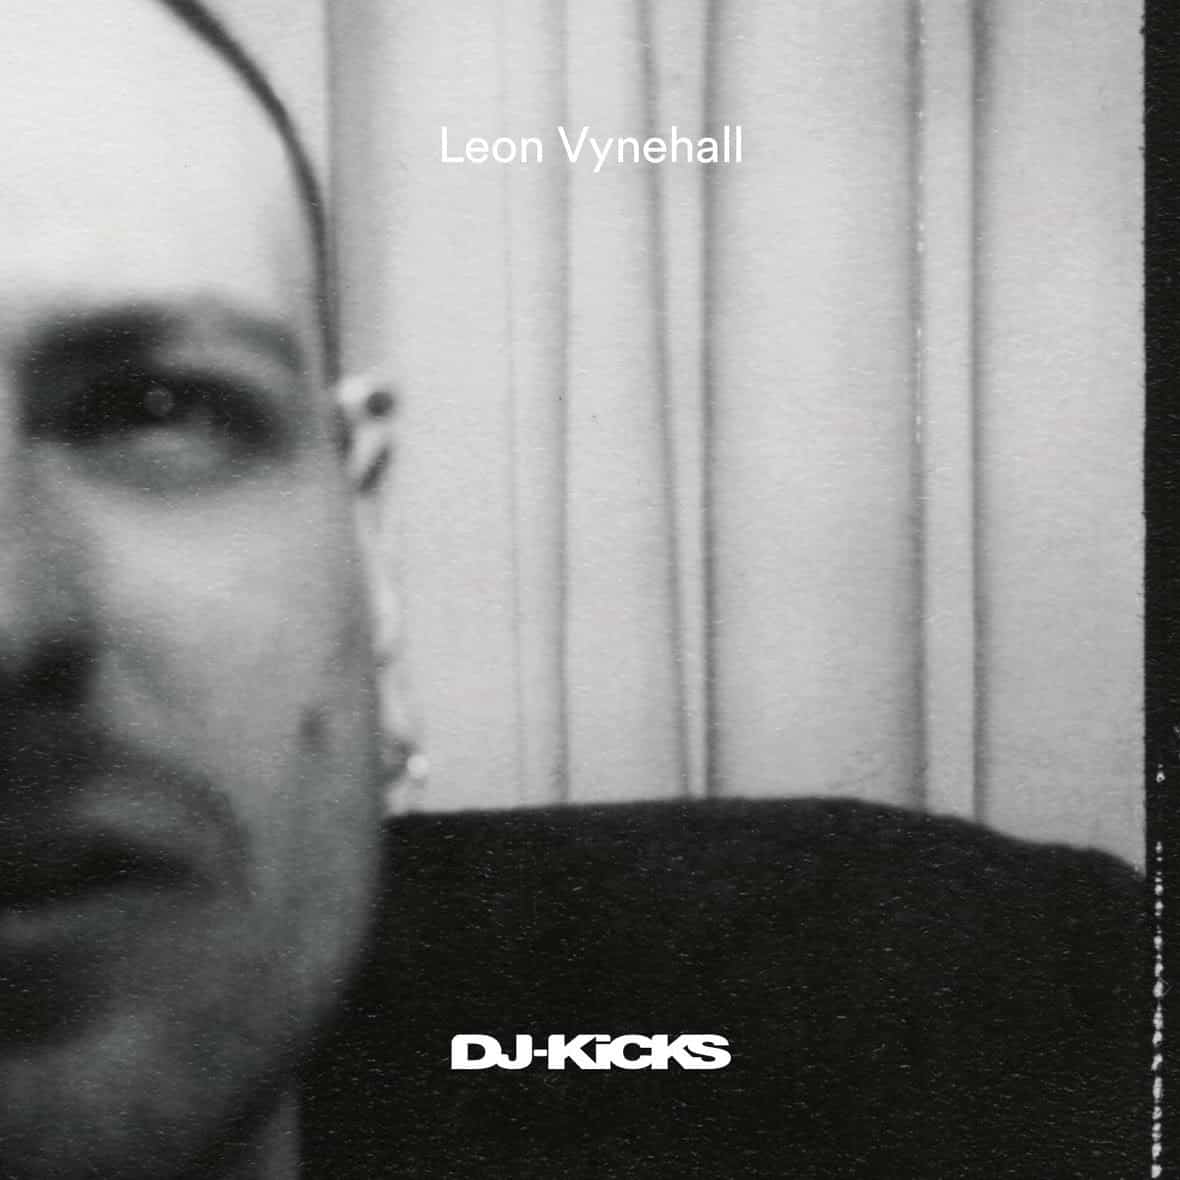 DJ KICKS: LEON VYNEHALL